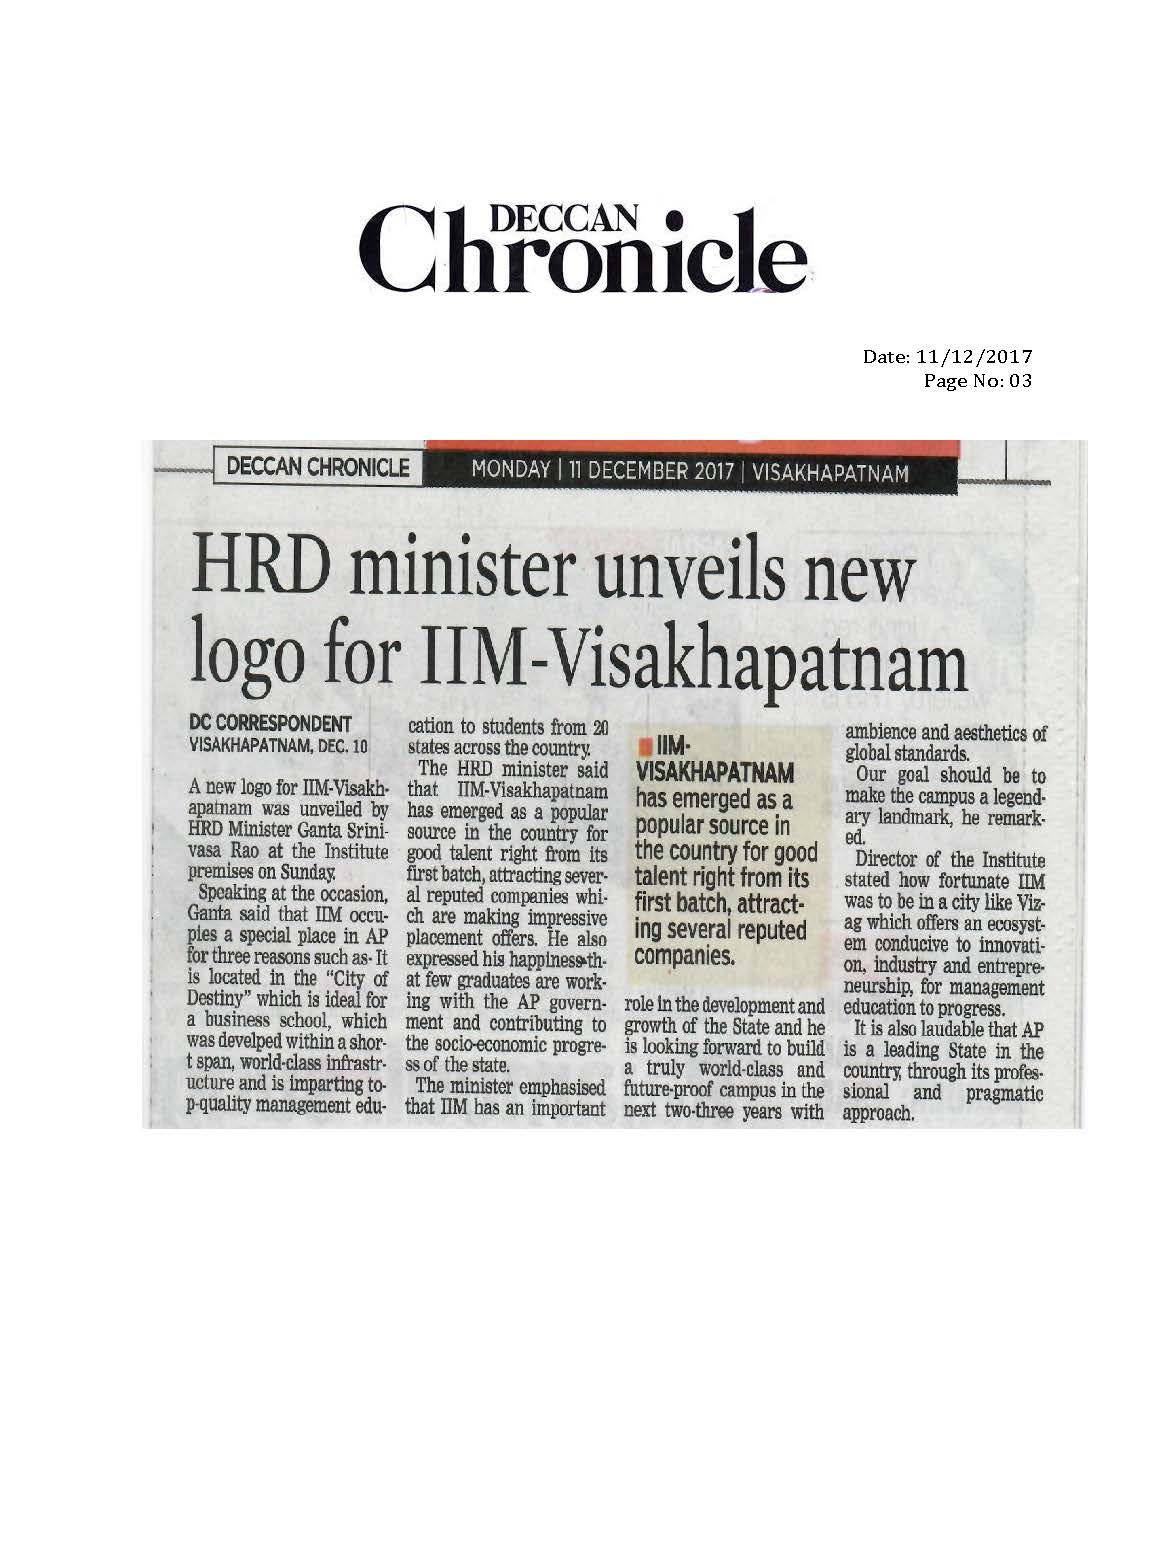 HRD minister unveils new logo for IIM-Visakhapatnam - 11.12.2017